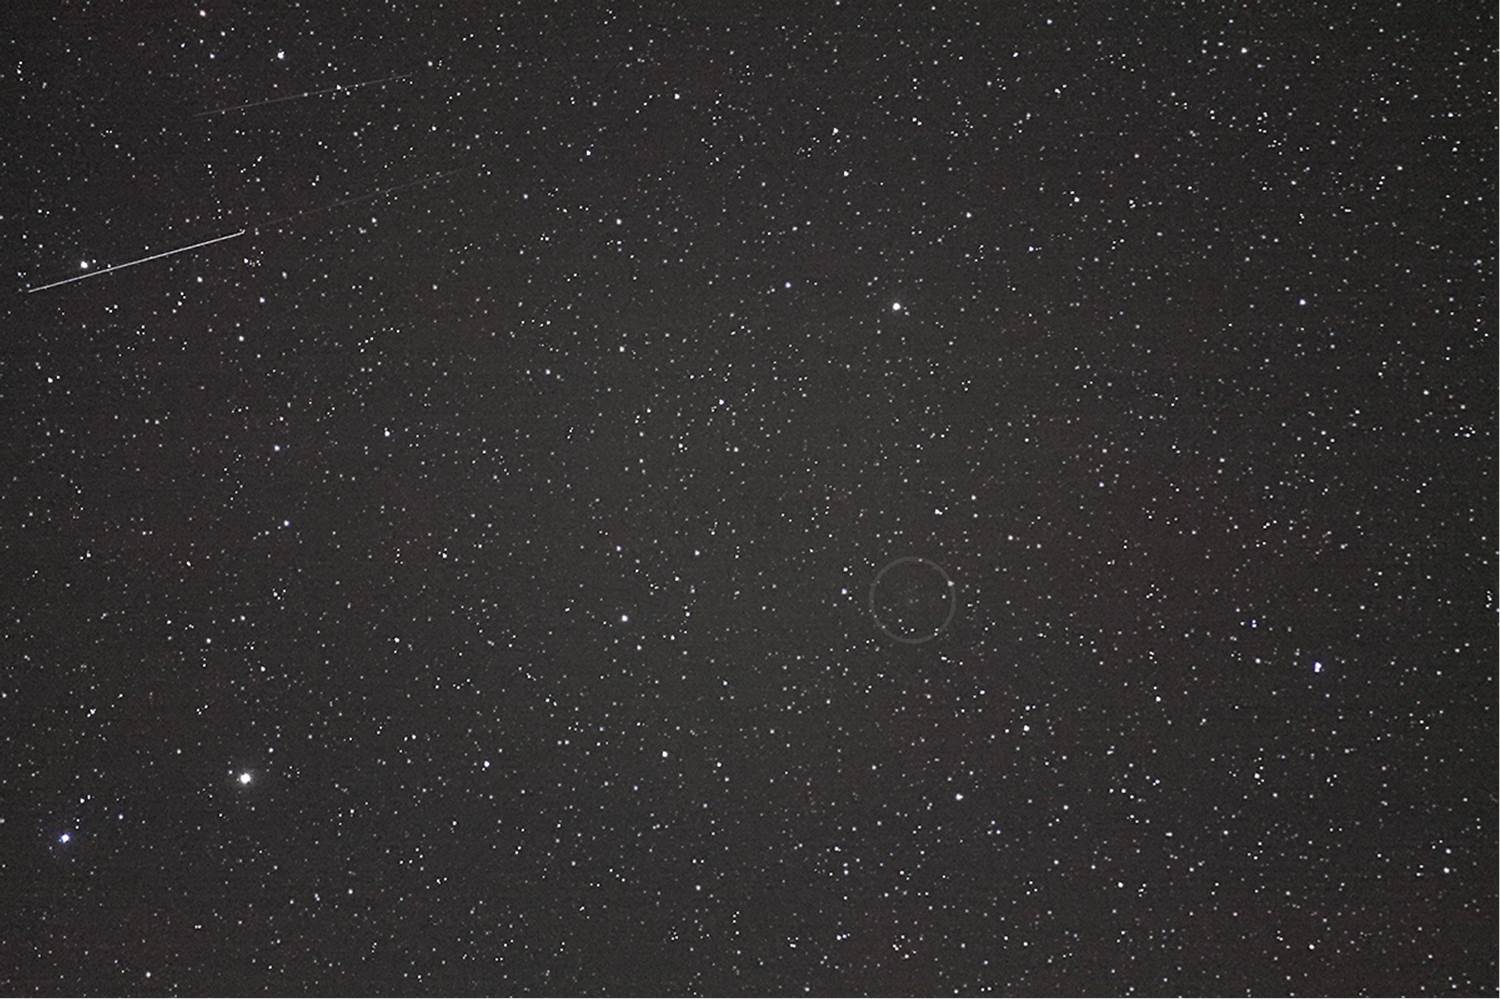 Comet 154P/Brewington